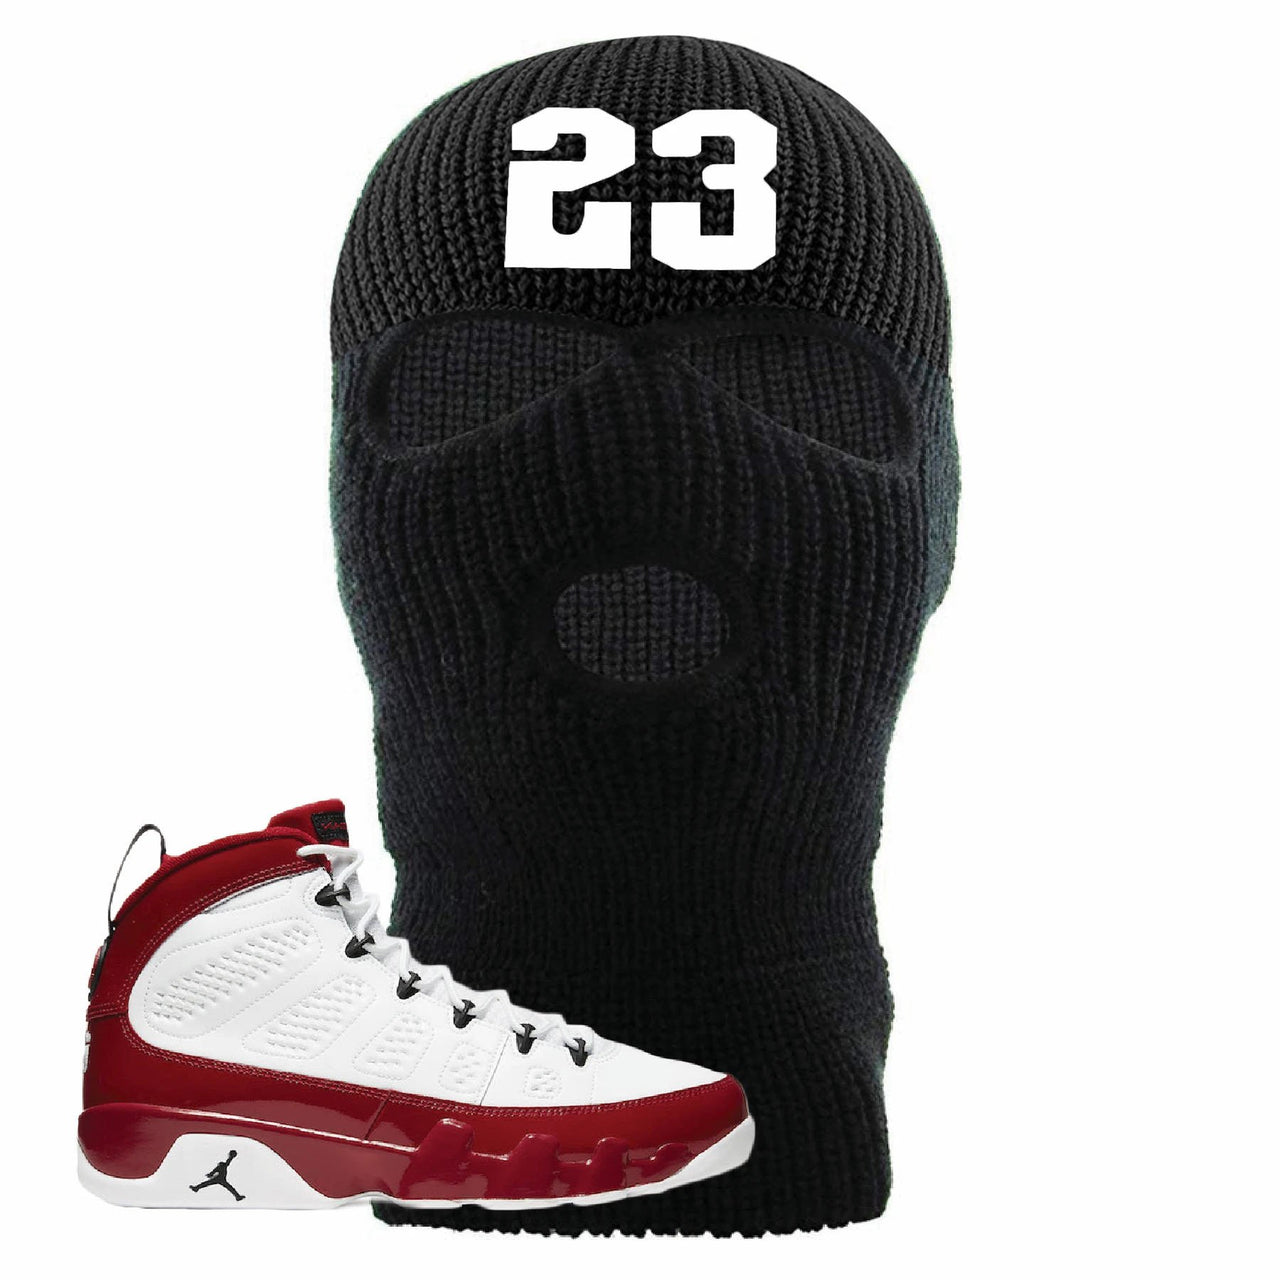 Jordan 9 Gym Red Jordan 9 23 Black Sneaker Hook Up Ski Mask